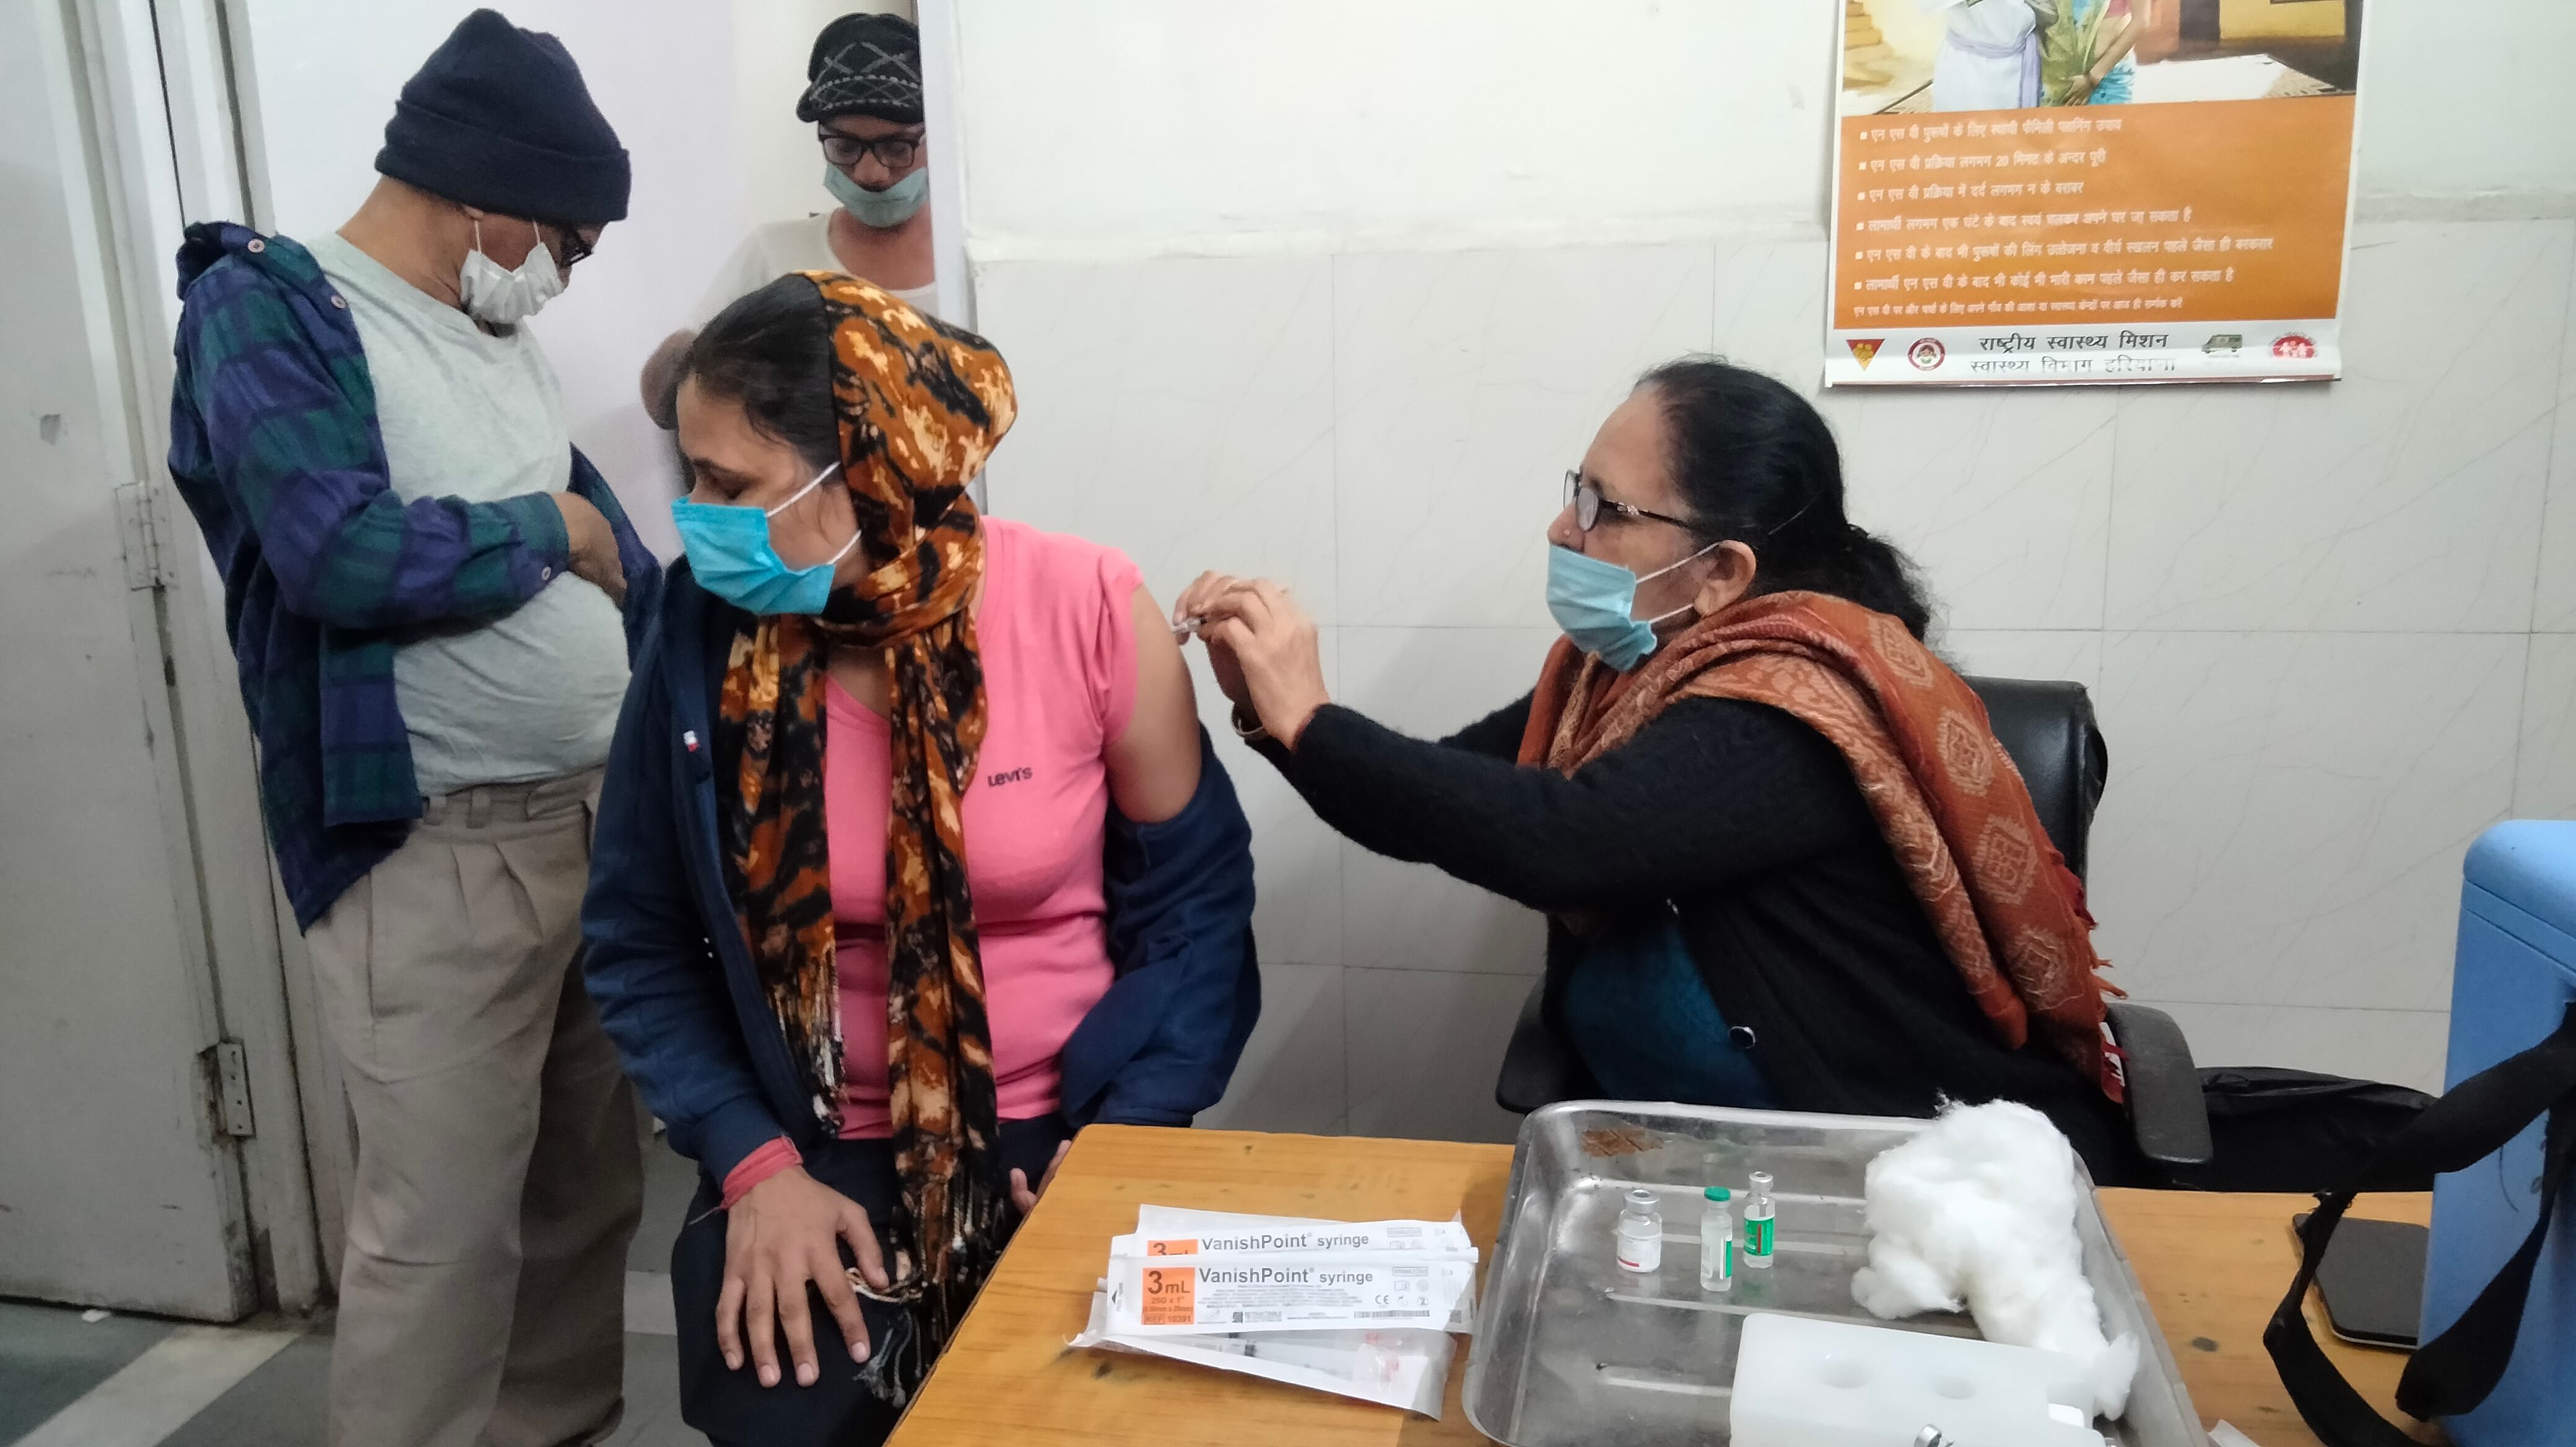 Wanita mendapatkan vaksin di rumah sakit kabupaten.  percakapan